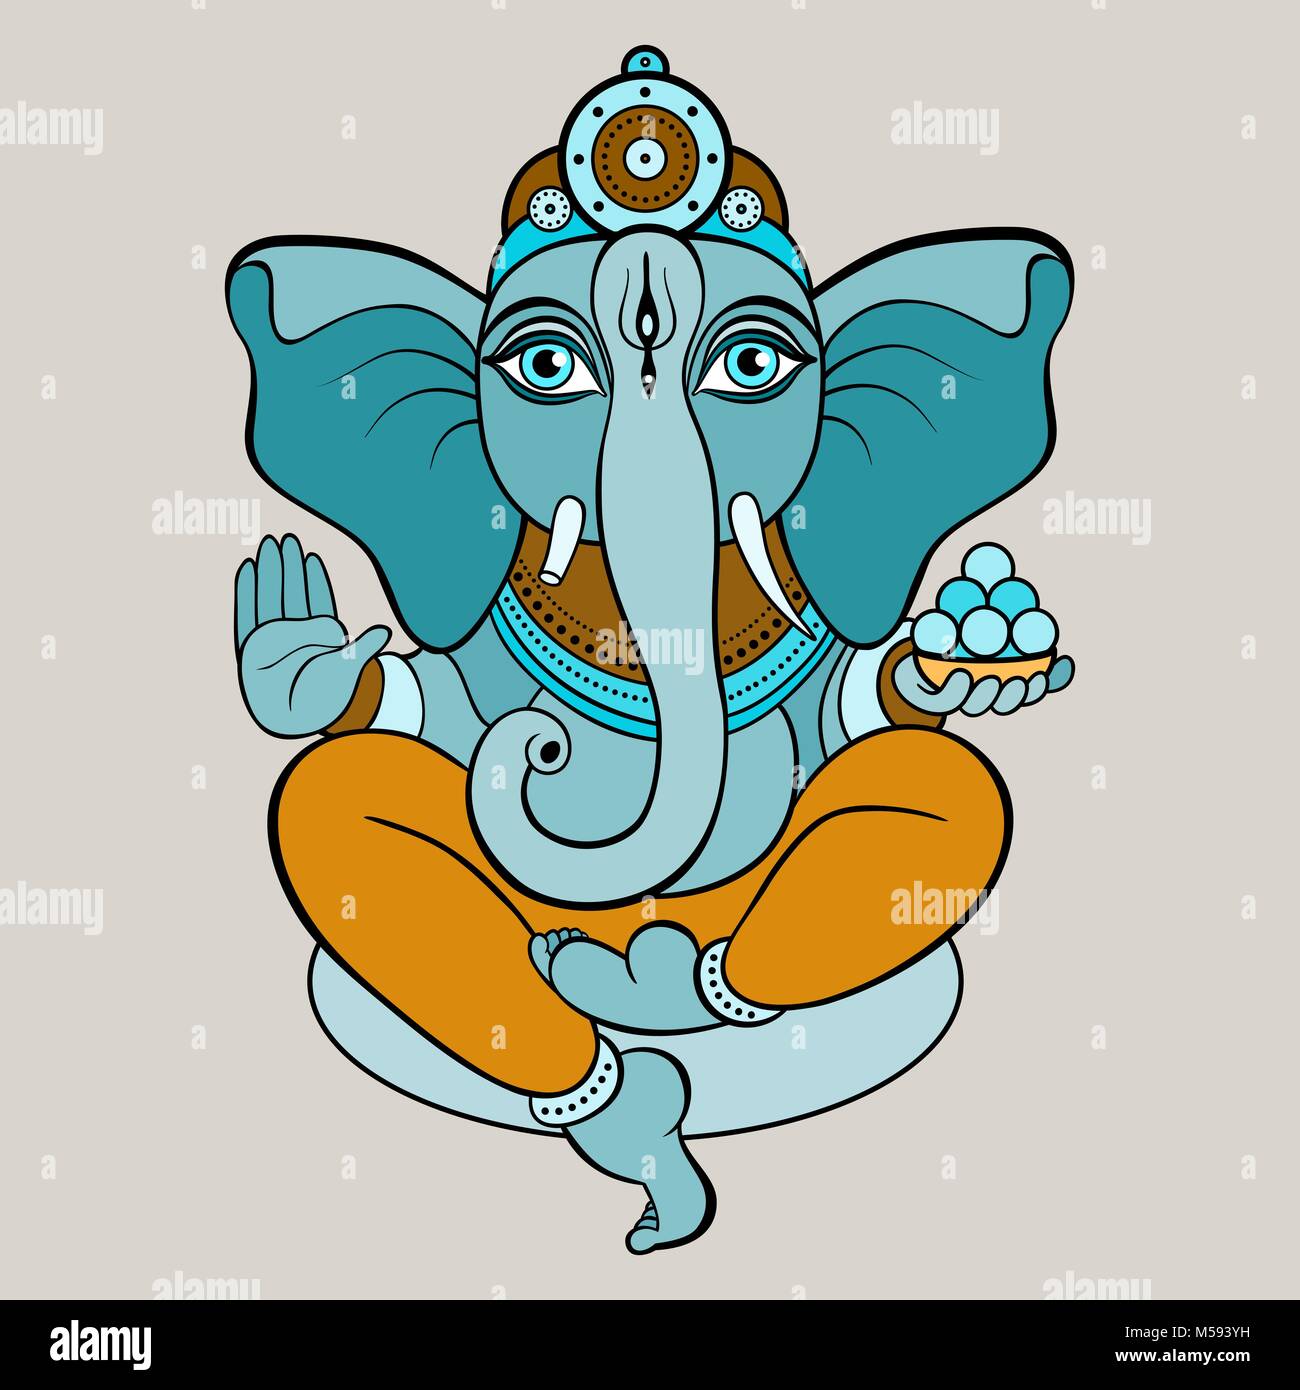 Ganesha Ganesh Chaturthi Drawing, ganesha, putih, mamalia png | PNGEgg-saigonsouth.com.vn